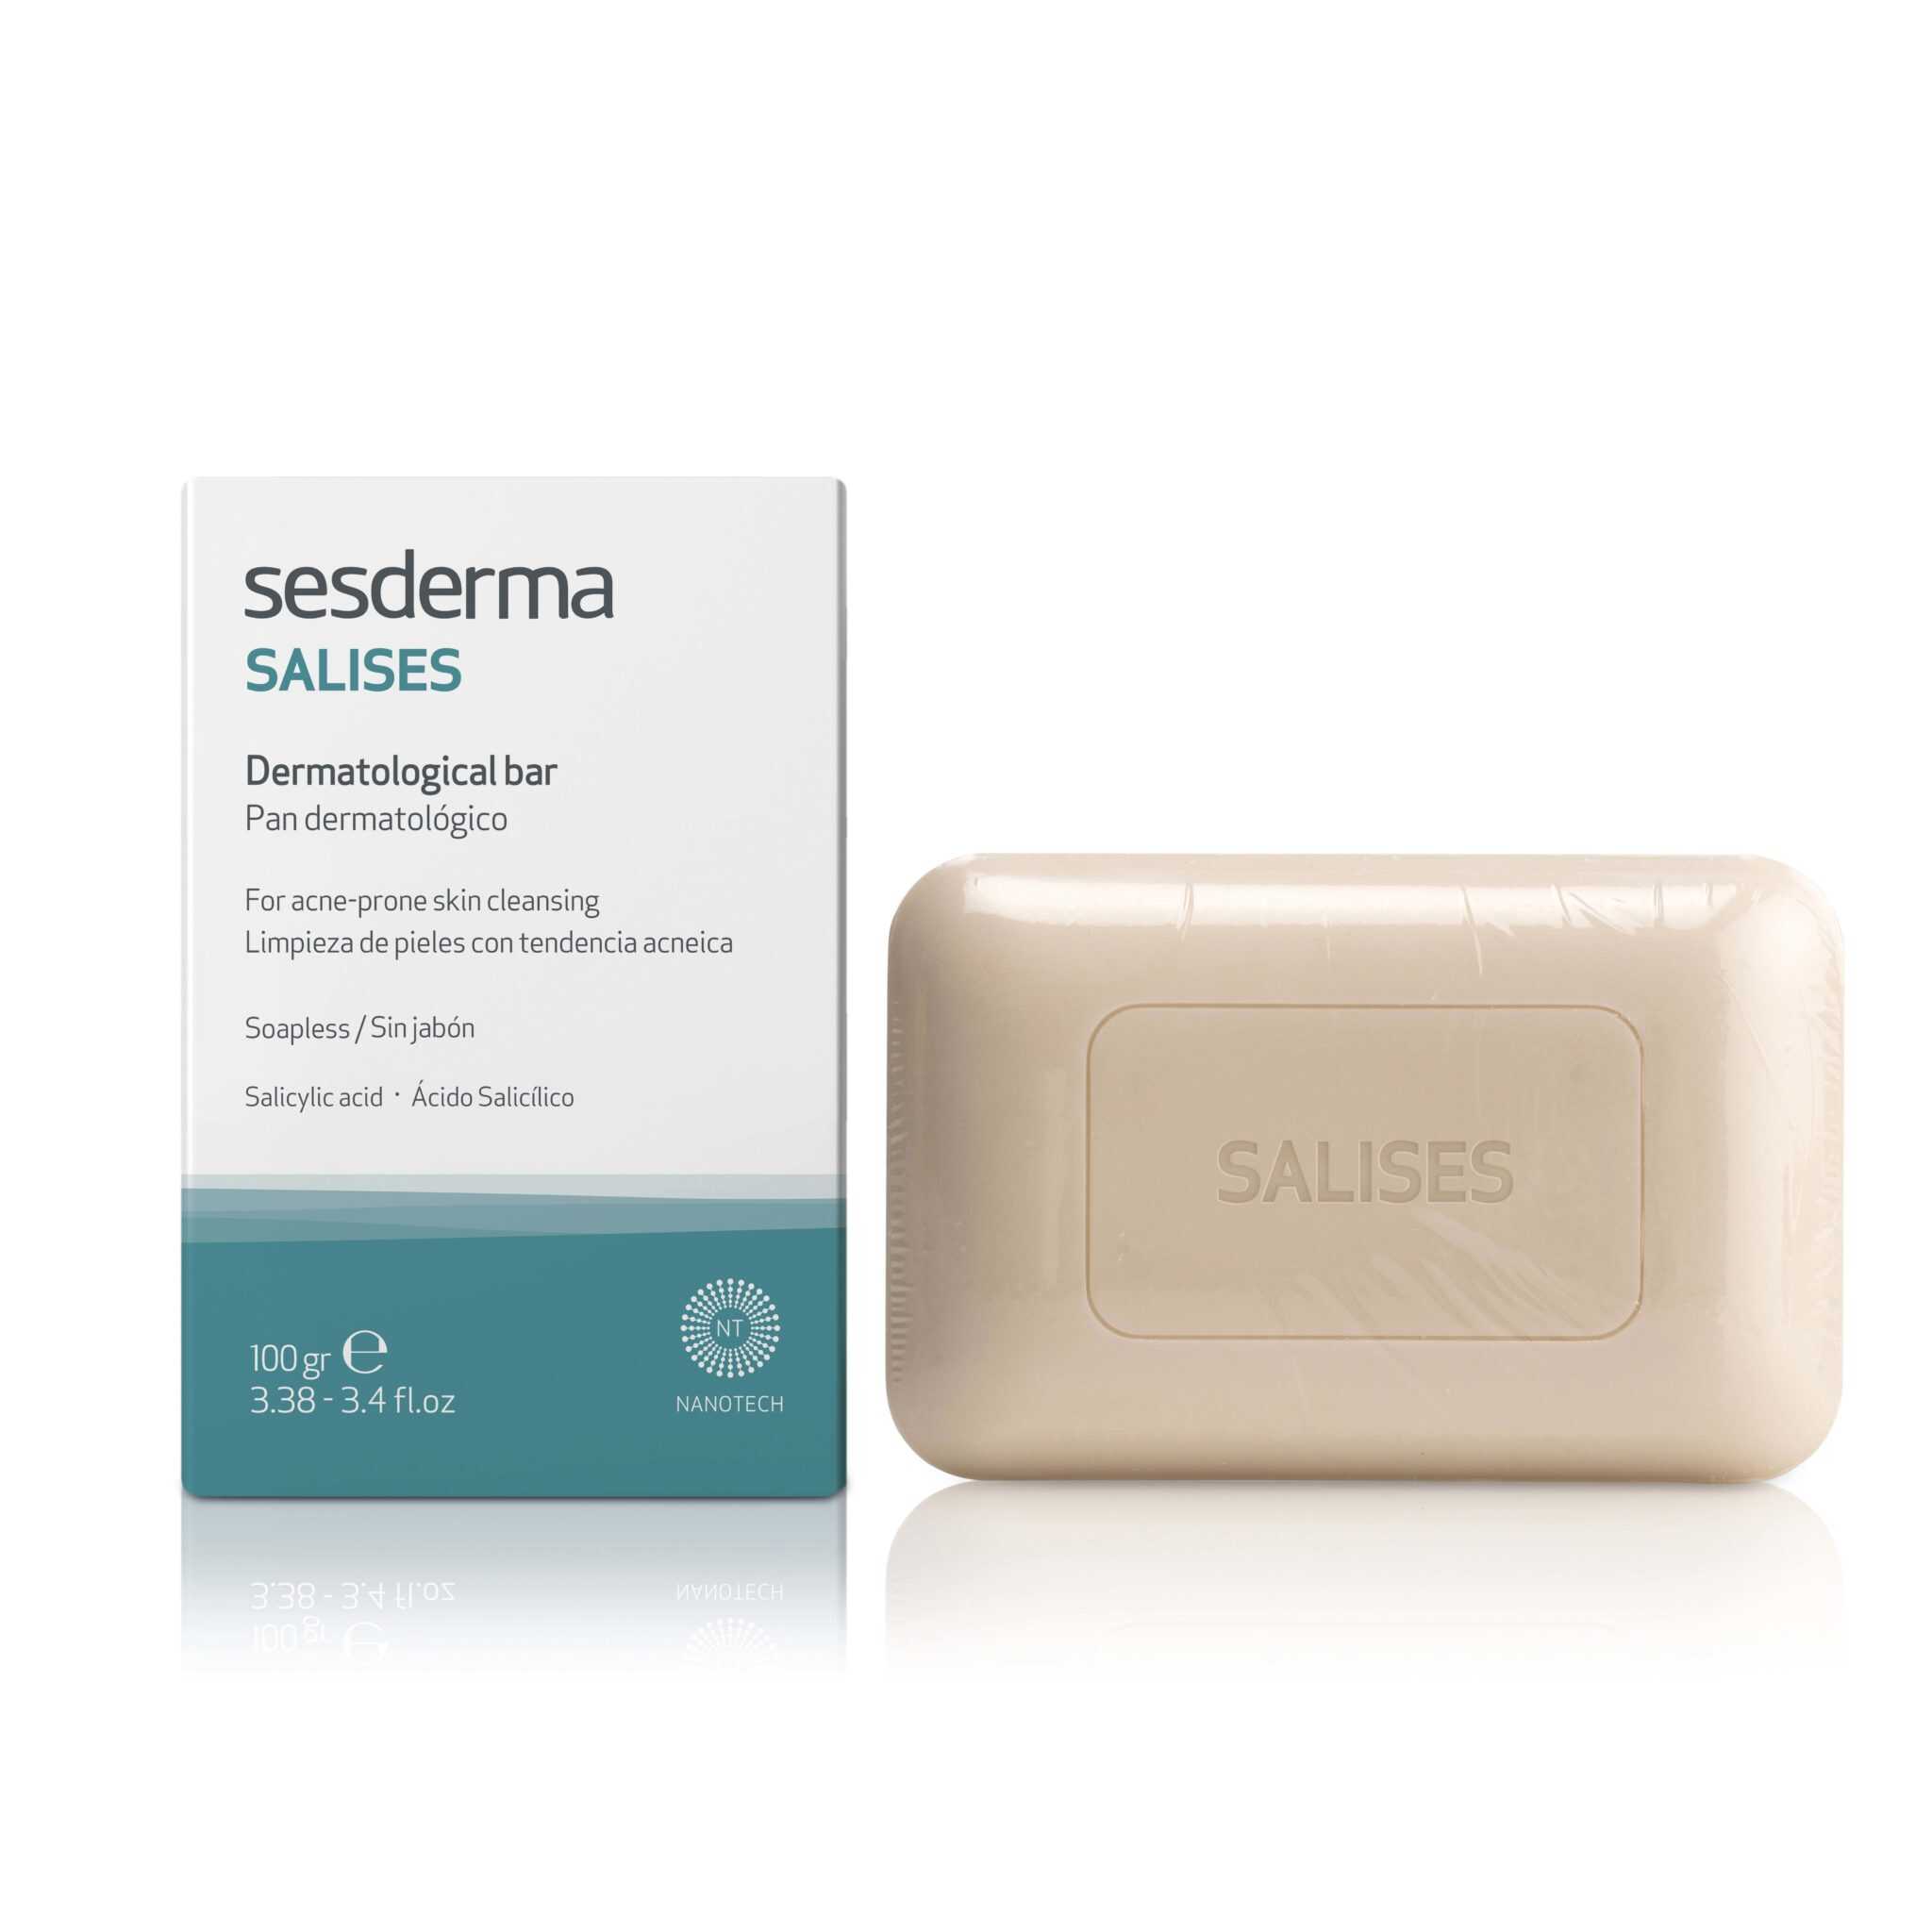 SESDERMA SALISES Dermatological Bar